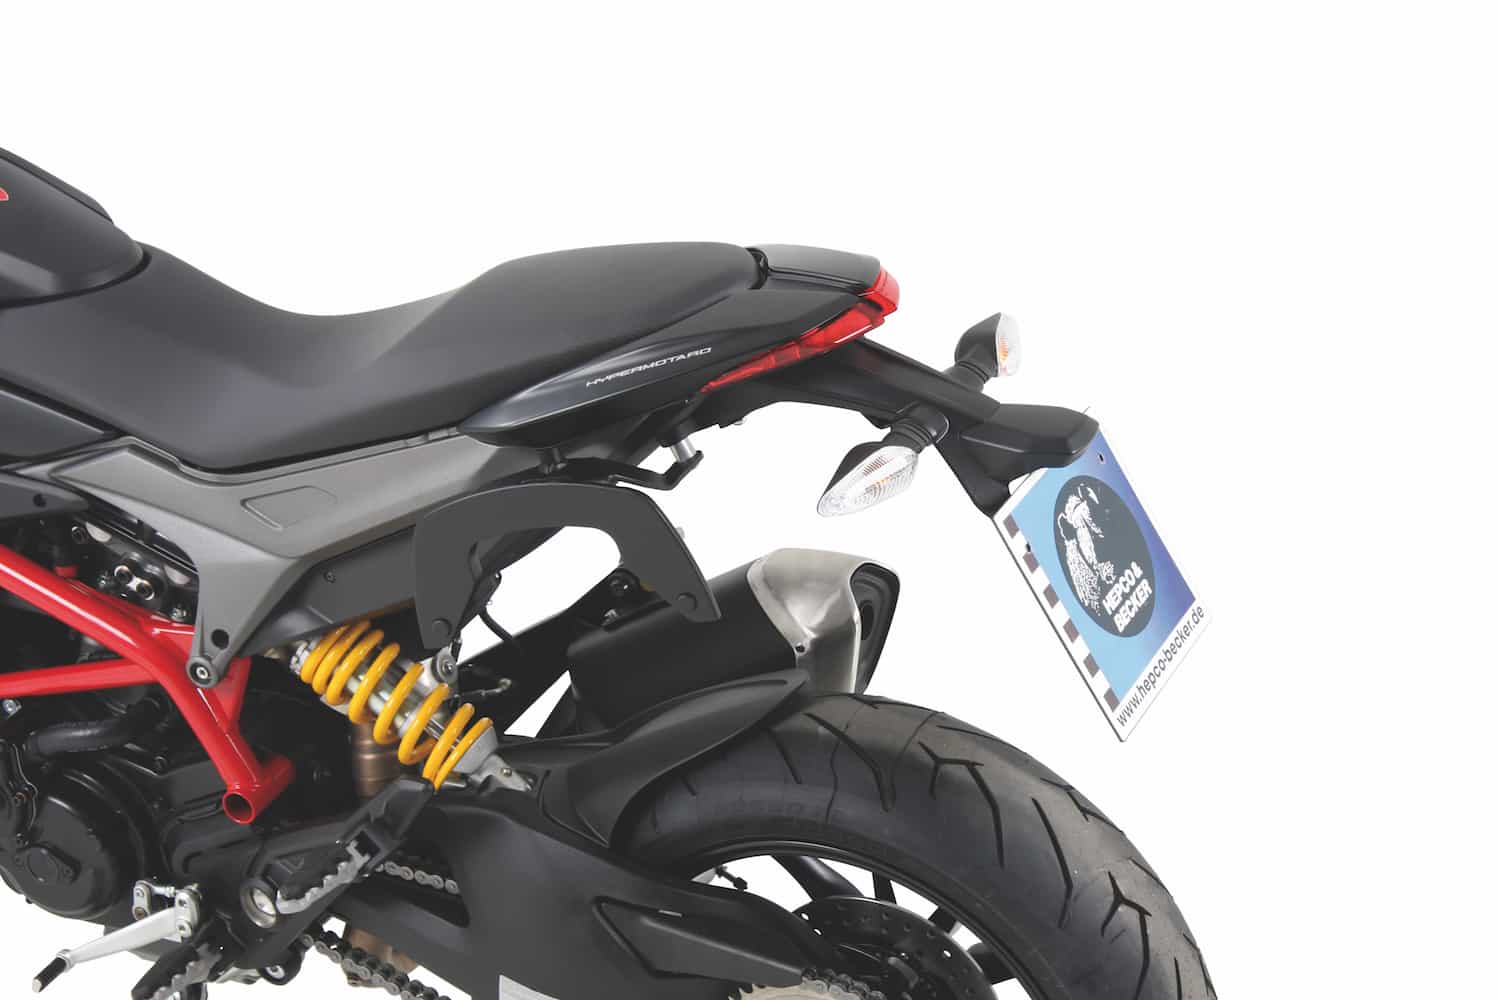 C-Bow sidecarrier for Ducati Hypermotard 821/SP (2013-2015)